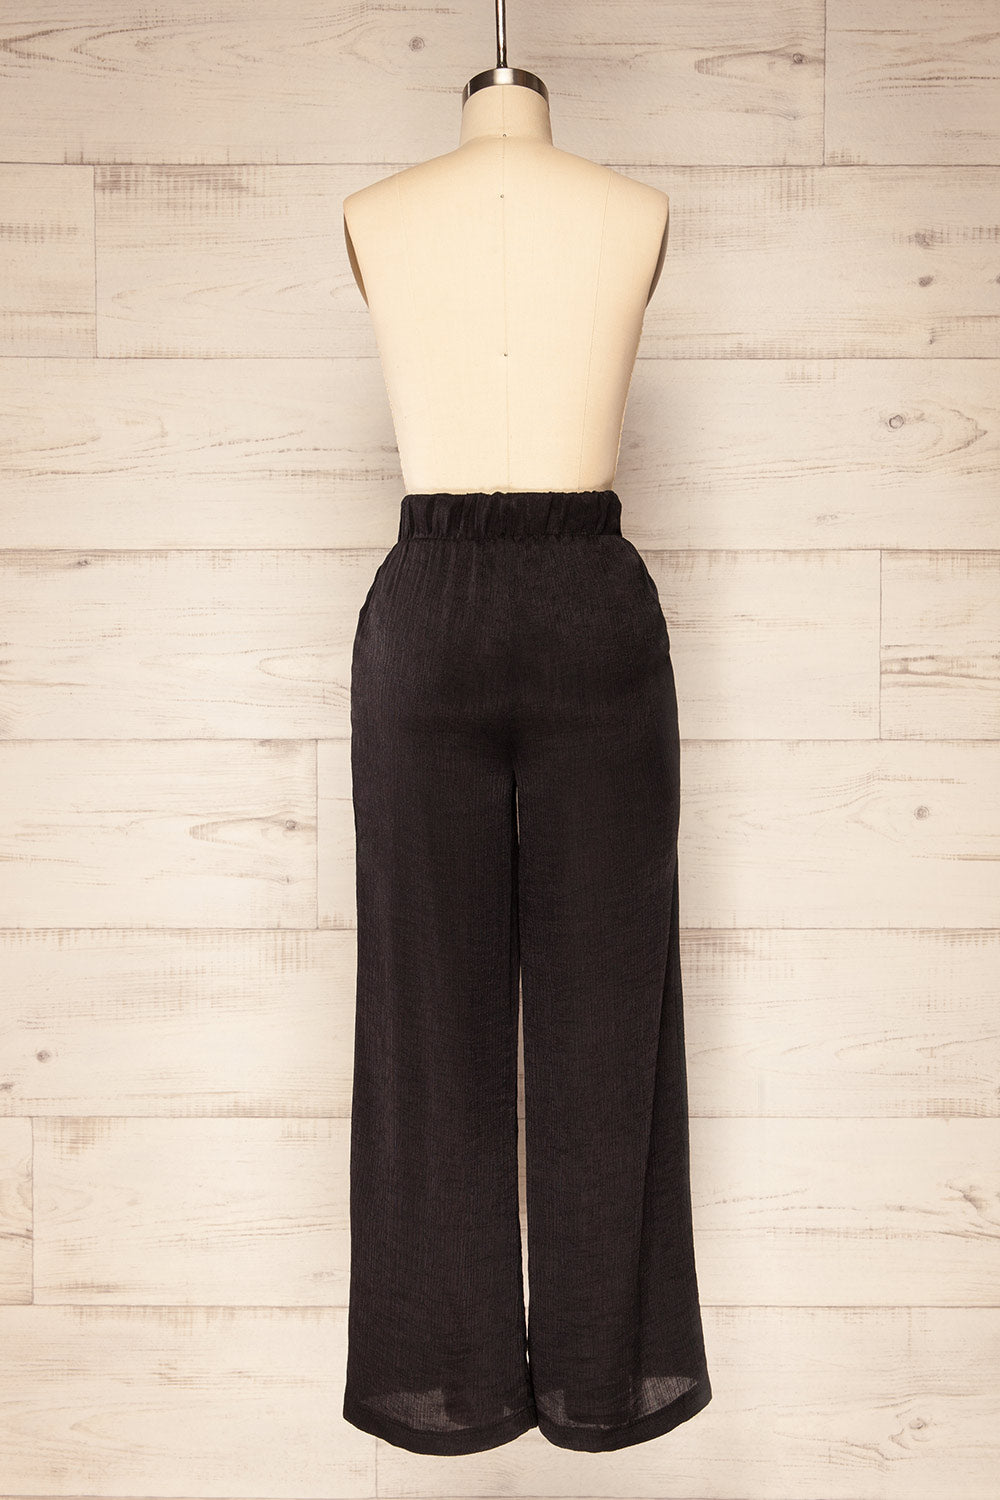 Napola Black High-Waisted Pants w/ Side Pockets | La petite garçonne back view